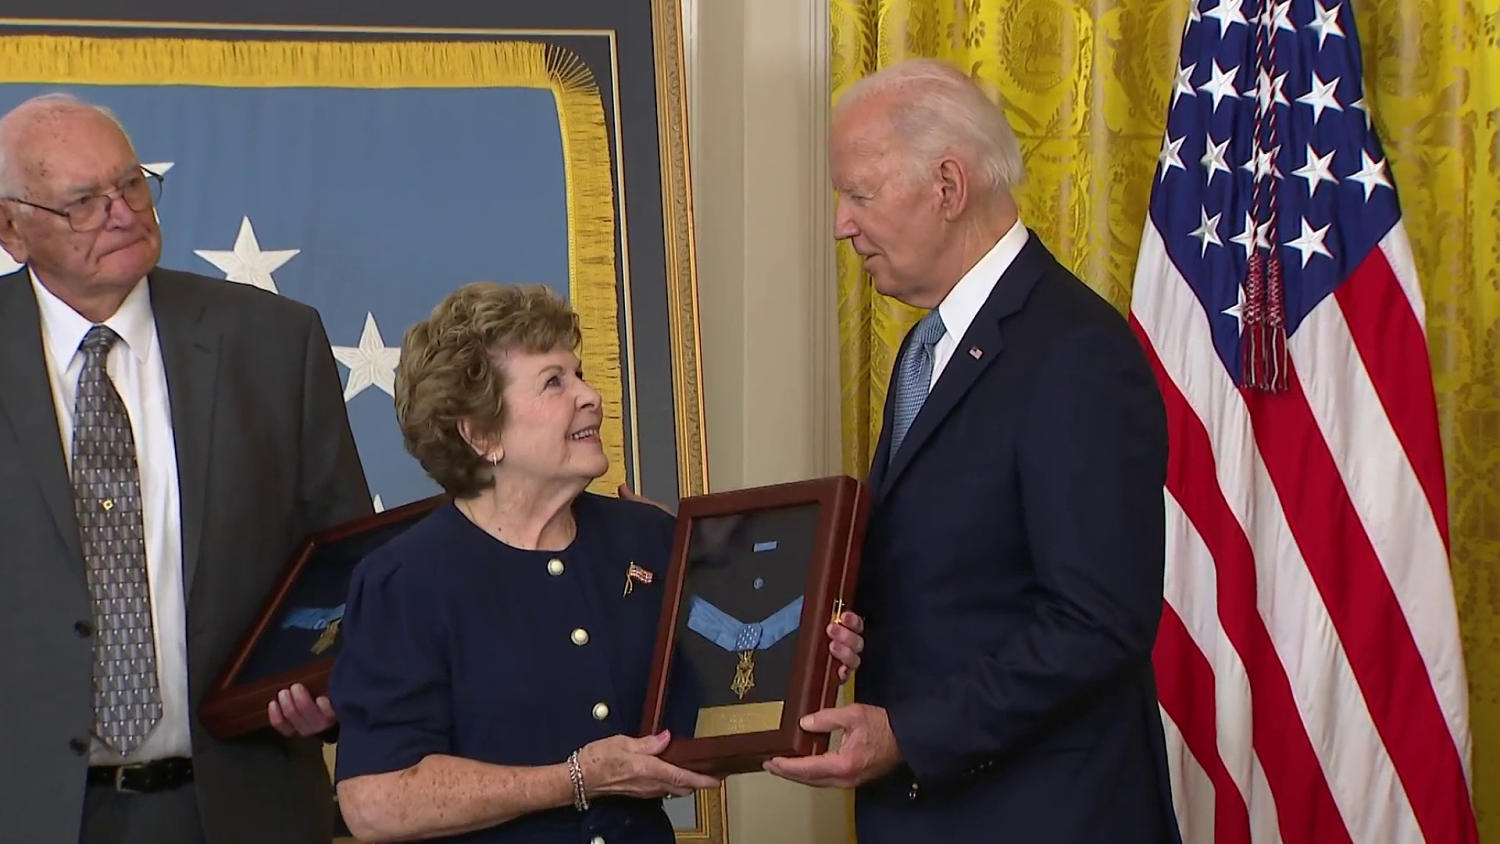 Biden presides over Medal of Honor ceremony at White House